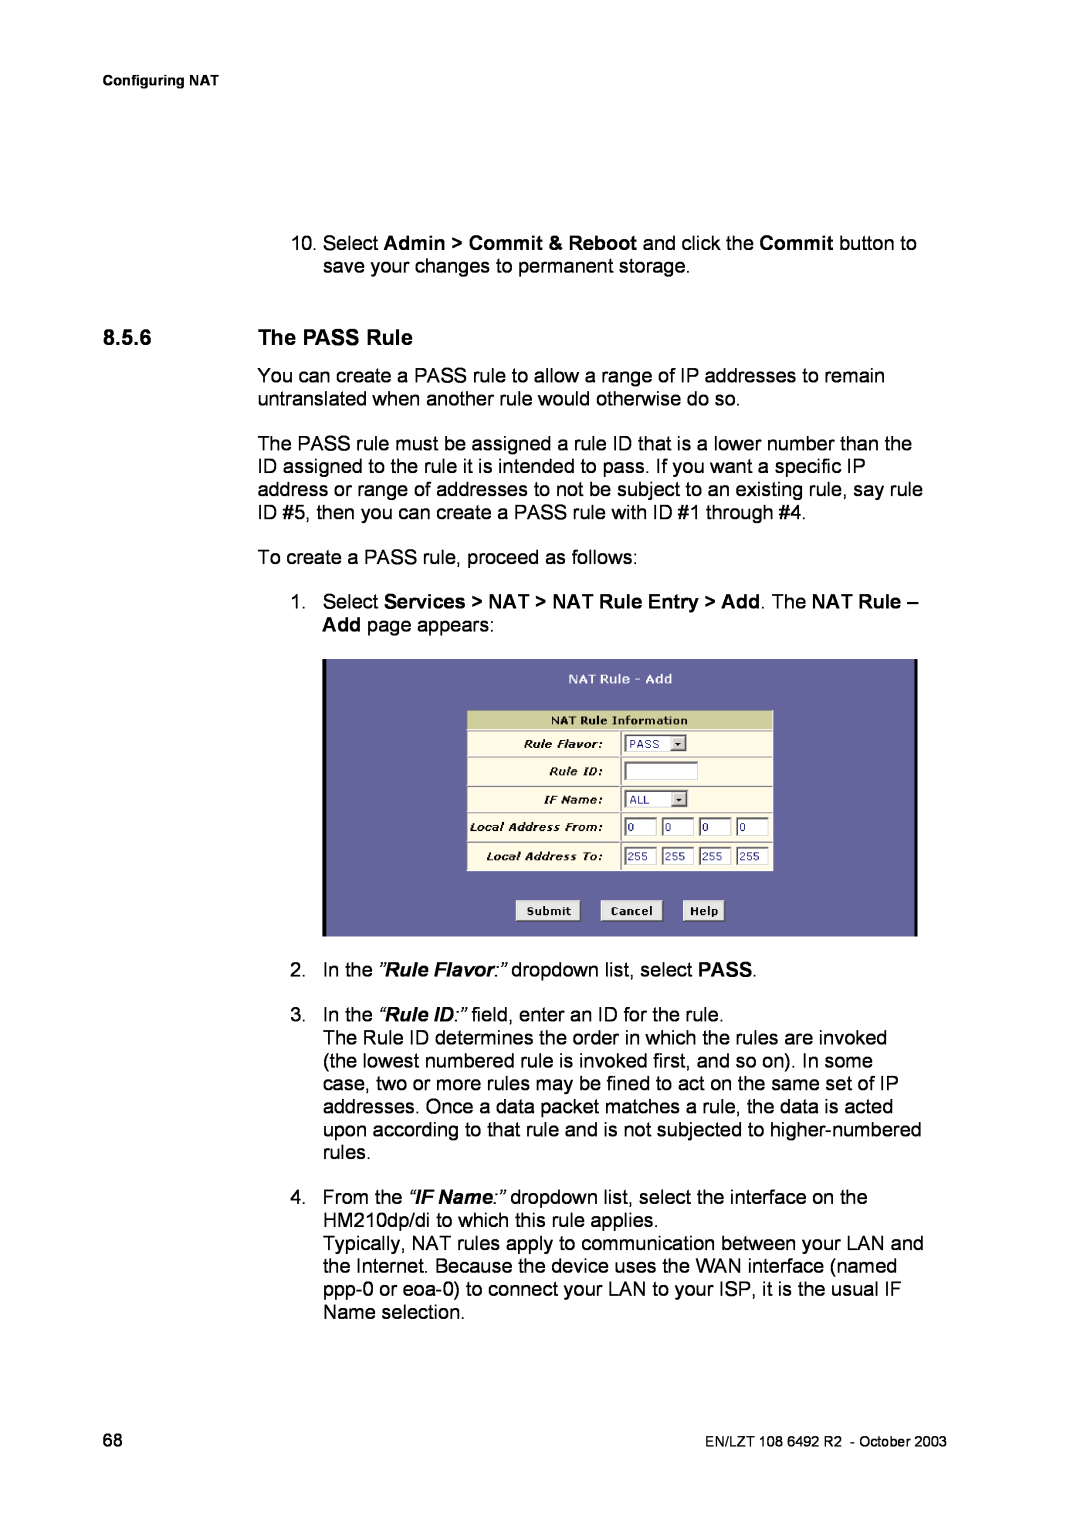 Garmin HM210DP/DI manual The PASS Rule 